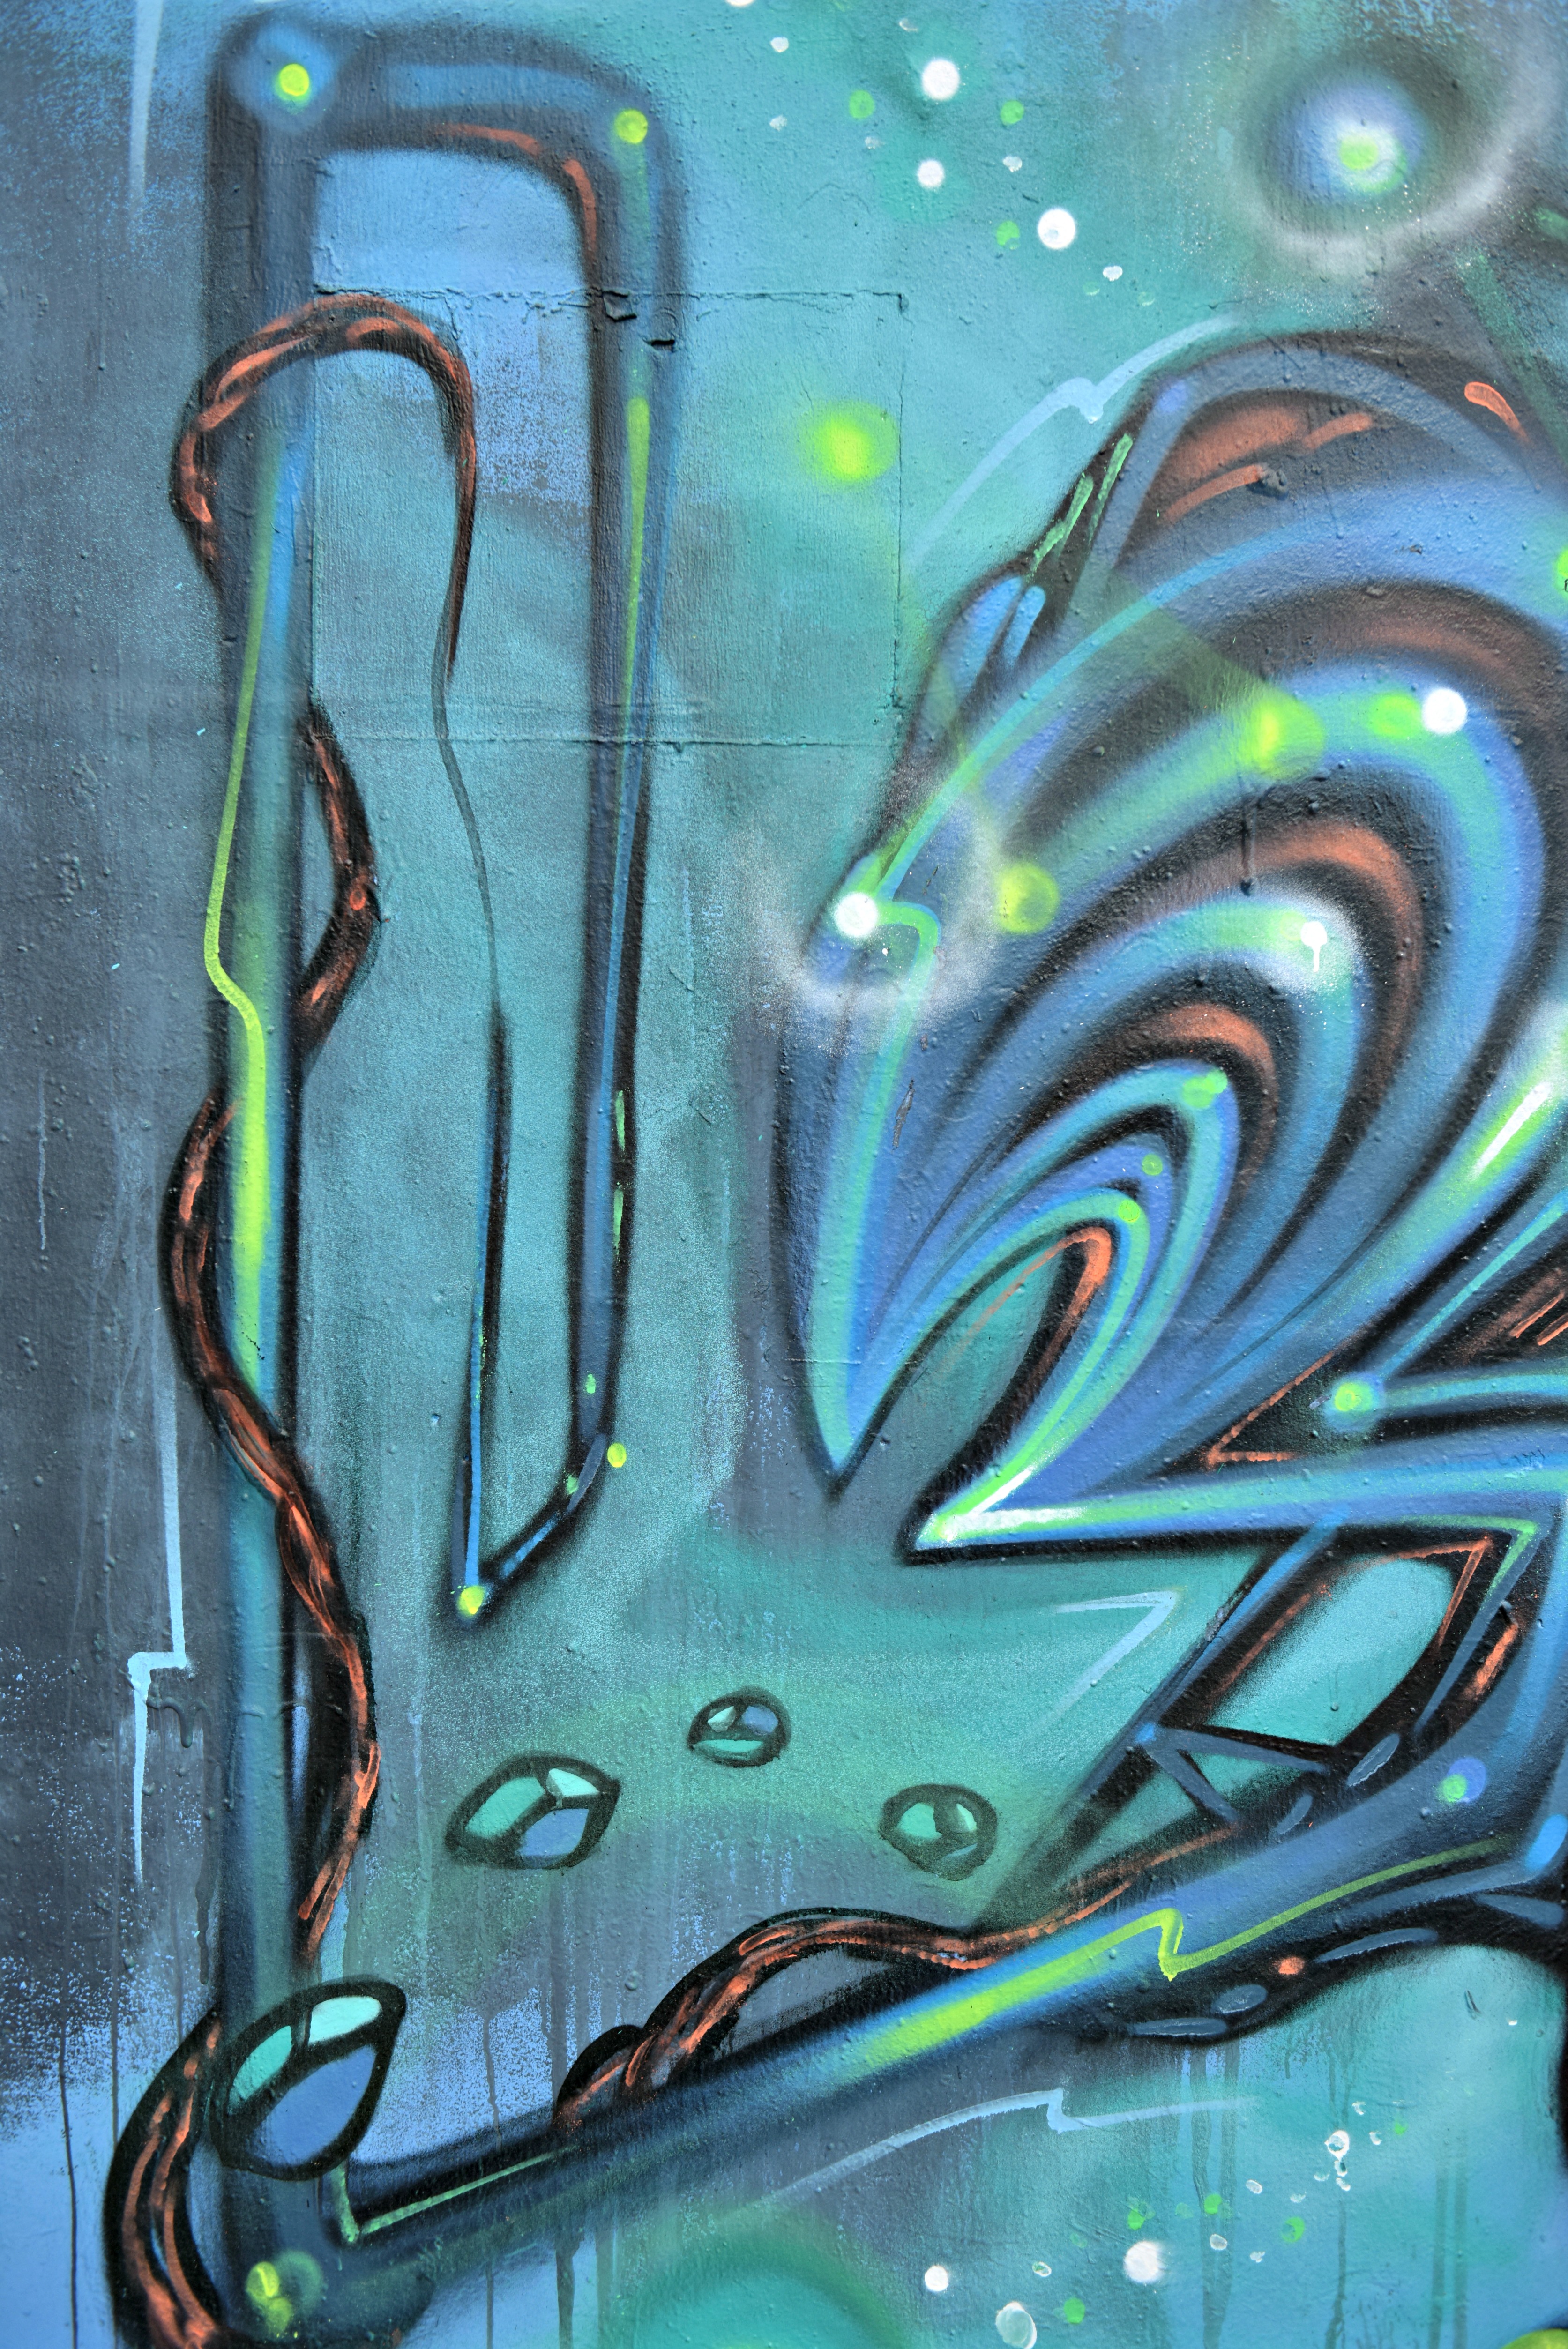 <img src="ana.jpg" alt="ana catfished alien street art wall"> 